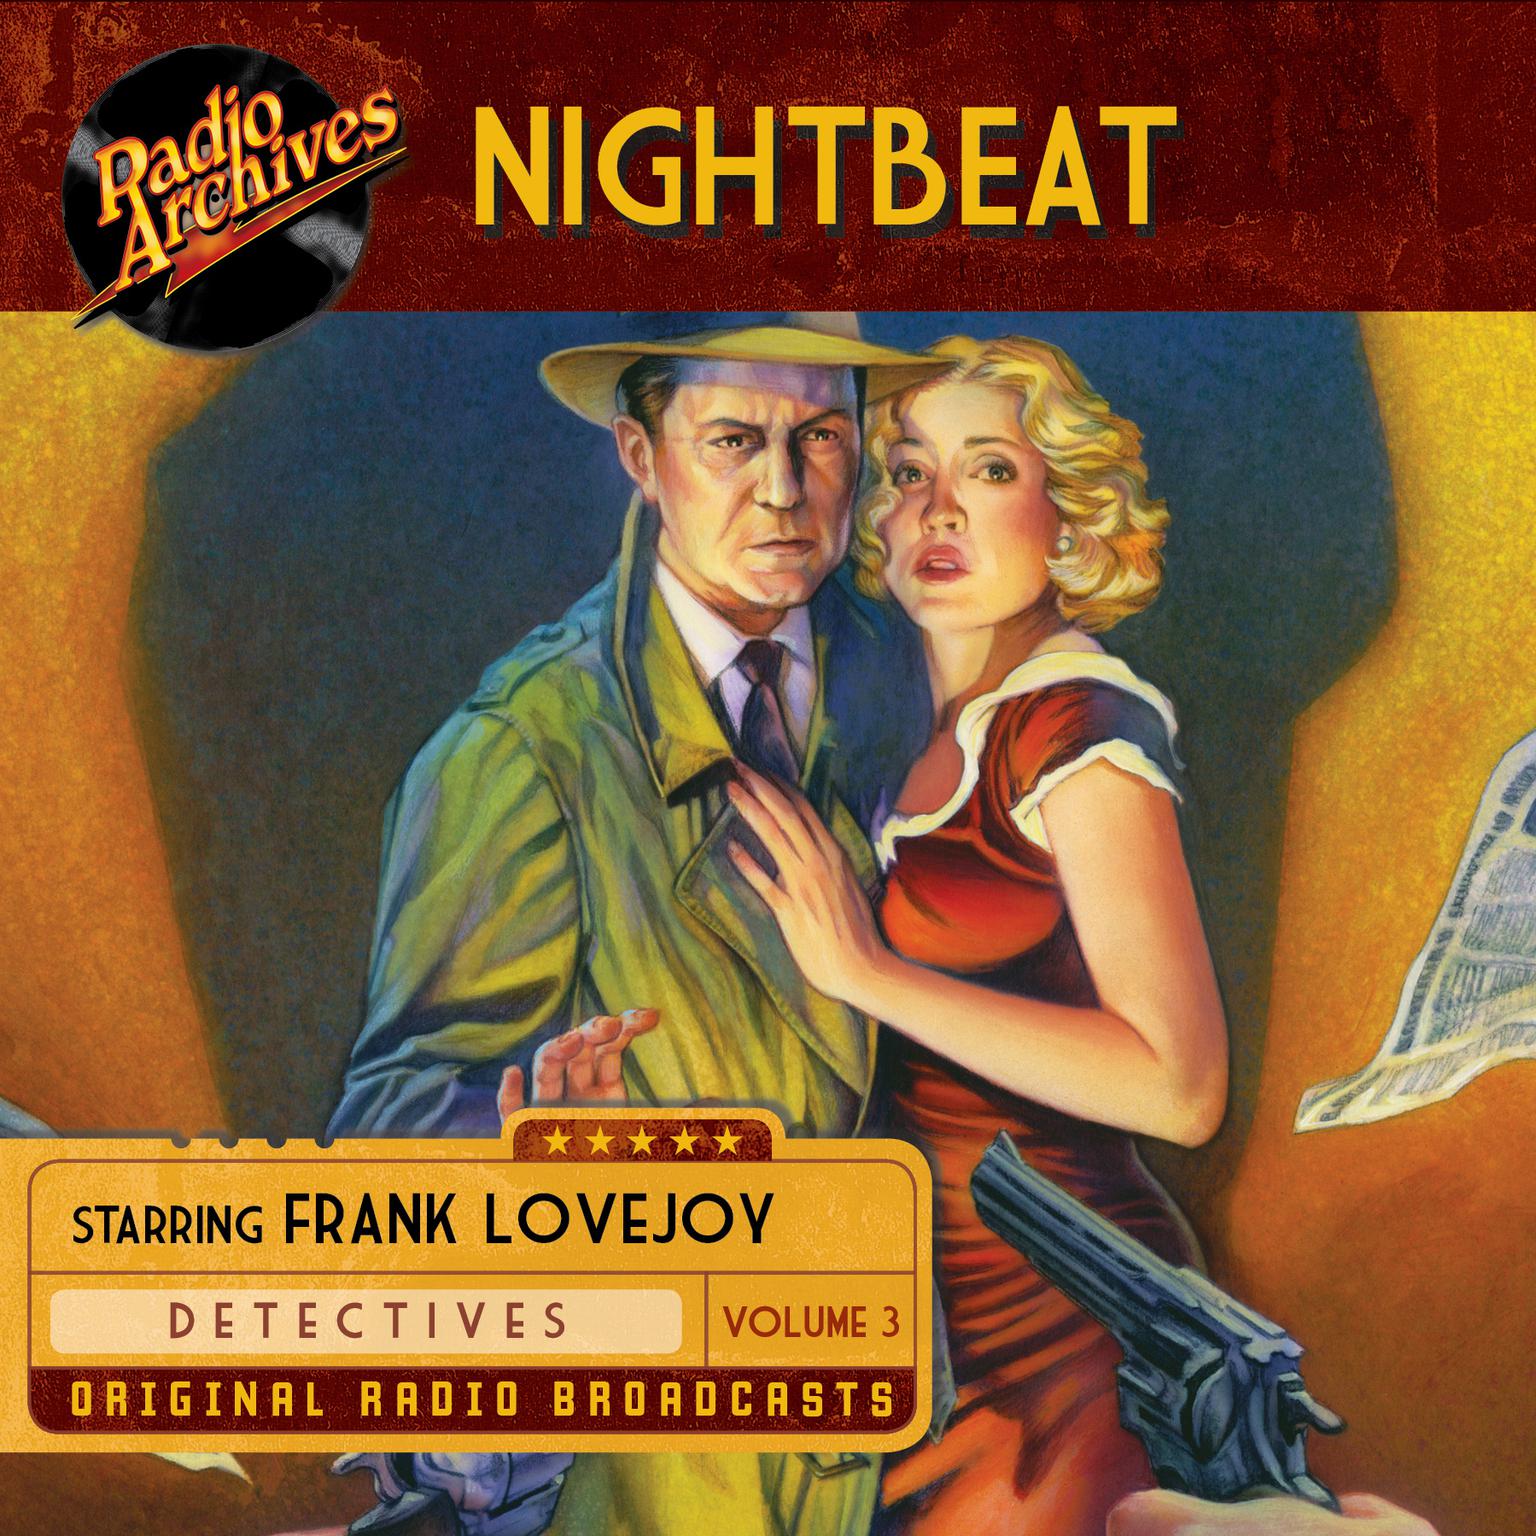 Nightbeat, Volume 3 Audiobook, by Radio Archives